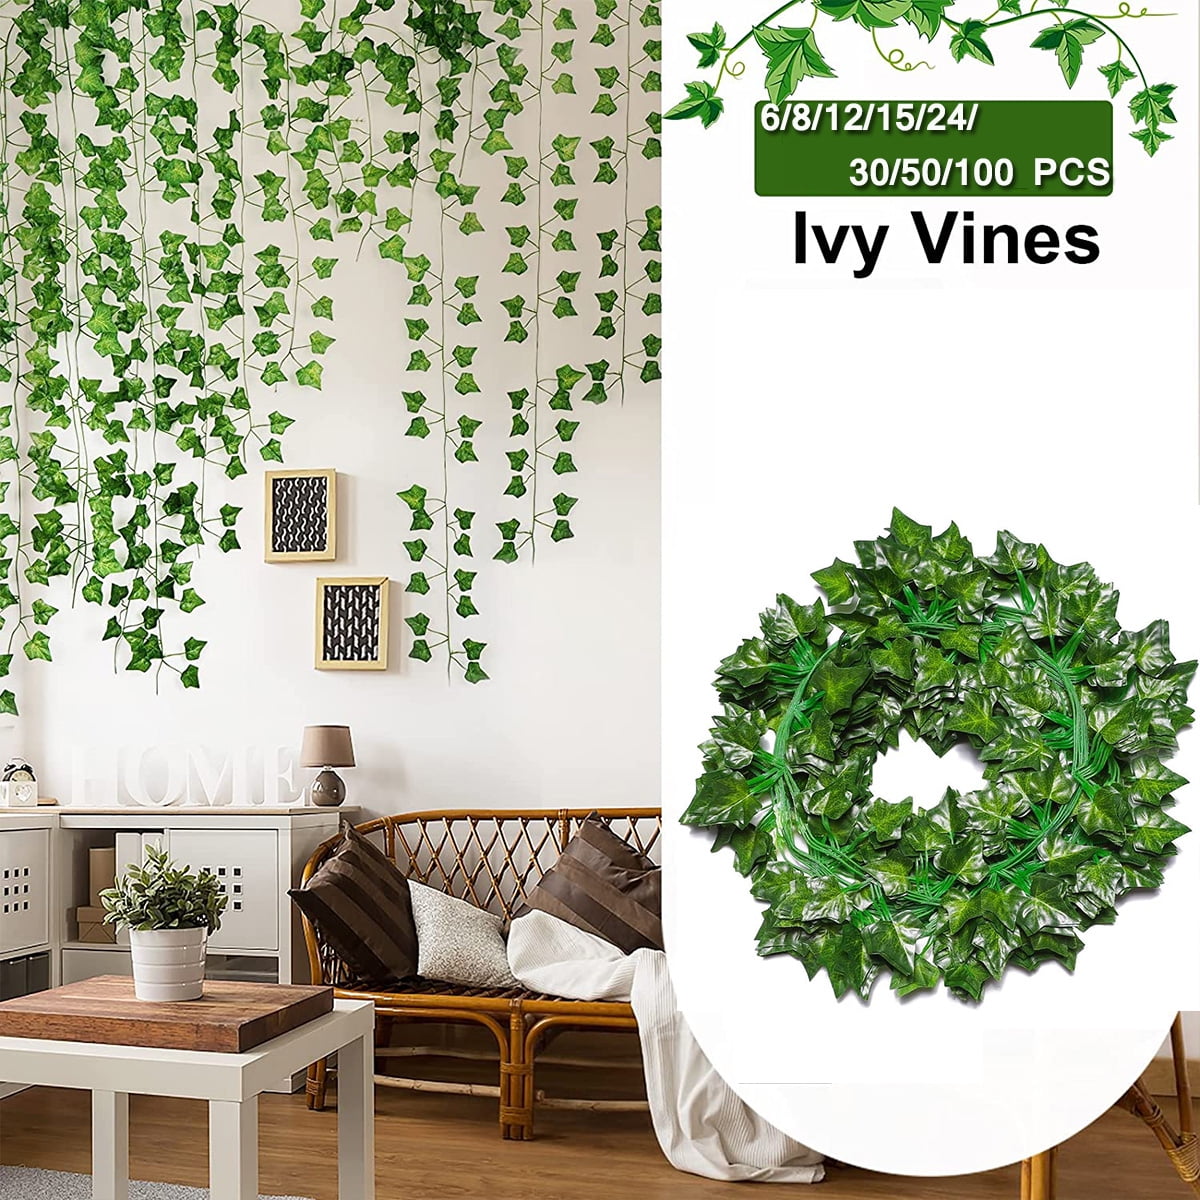 5ft Green Ivy Vine, Pack of 6